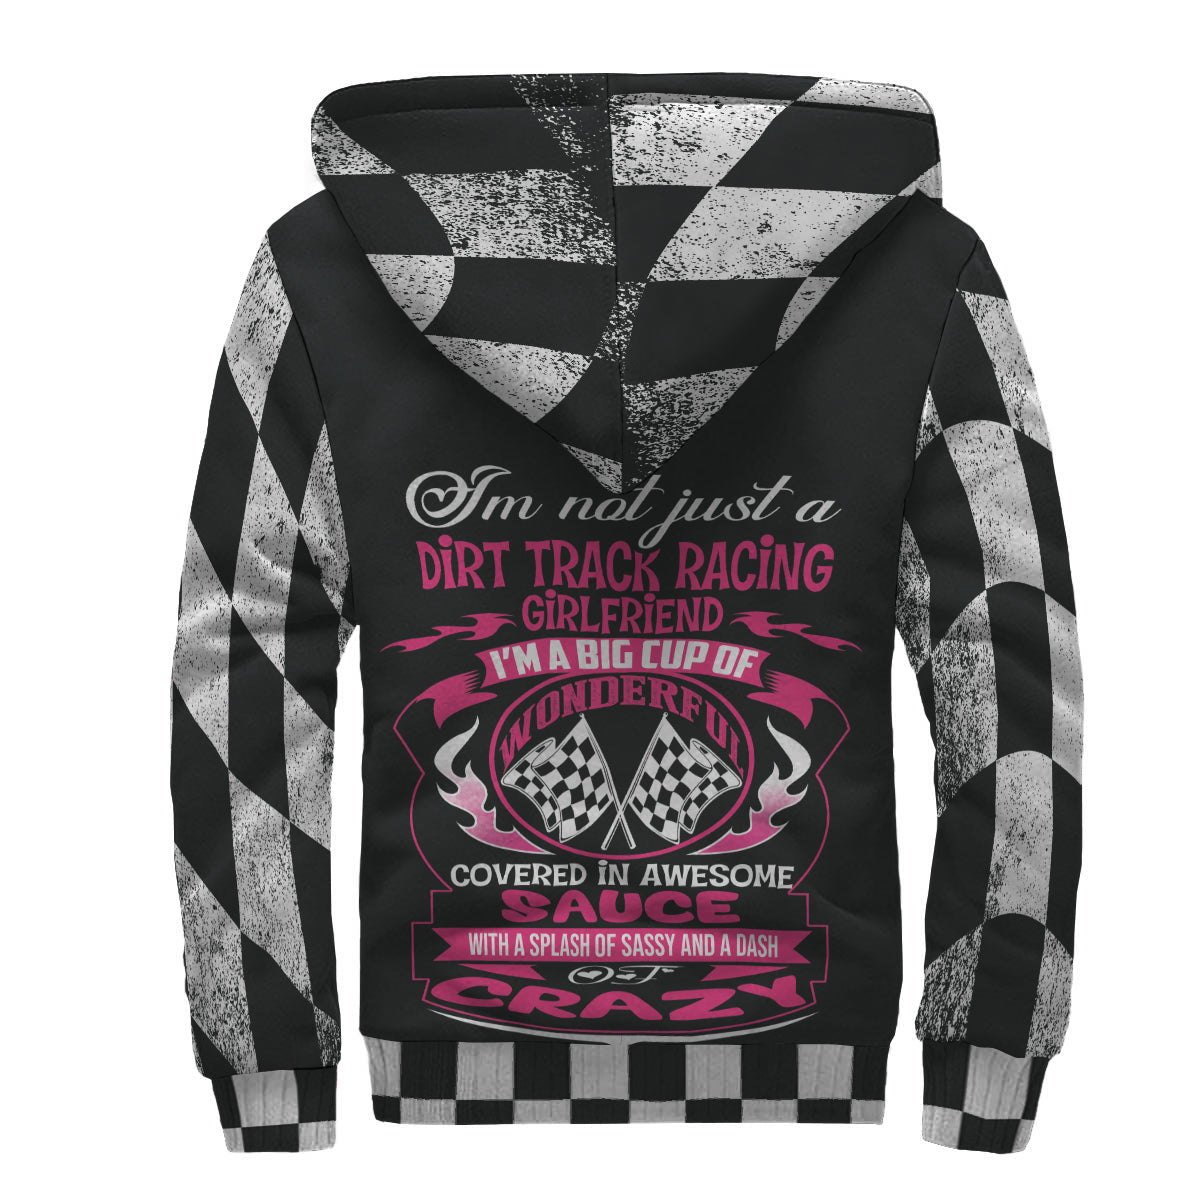 dirt track racing girlfriend jacket